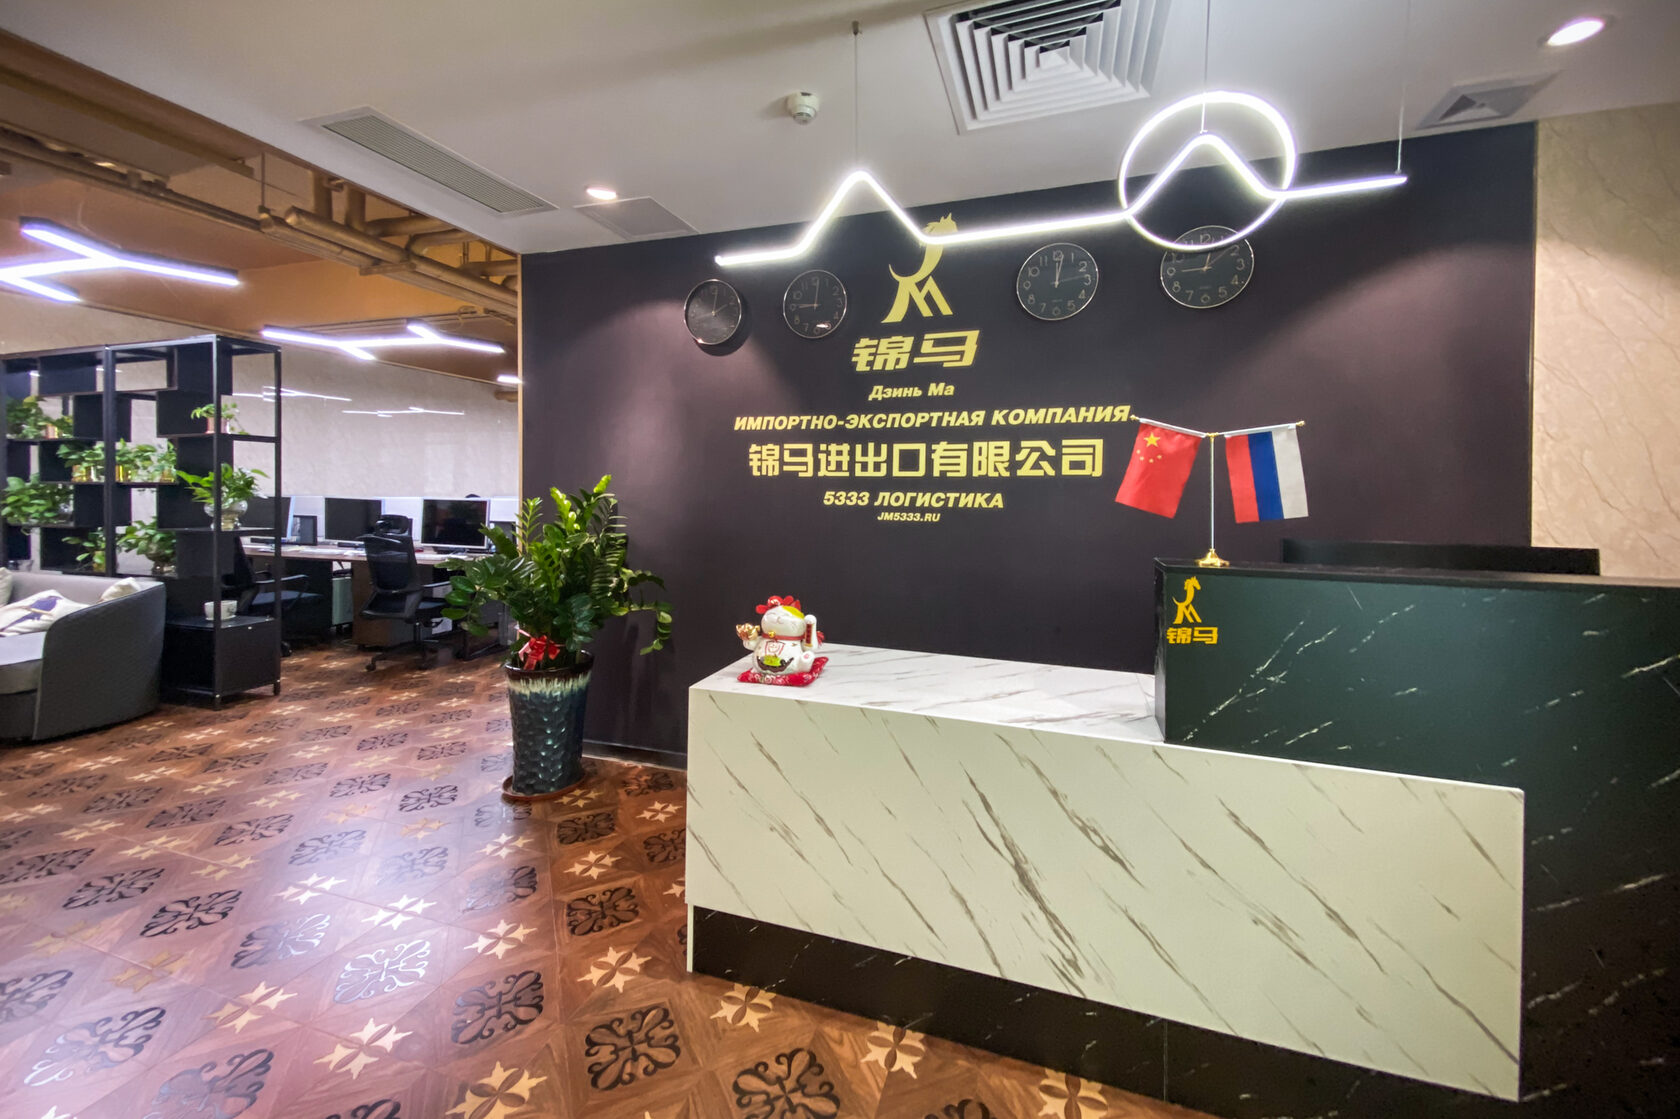 офис дзинь ма в гуанчжоу